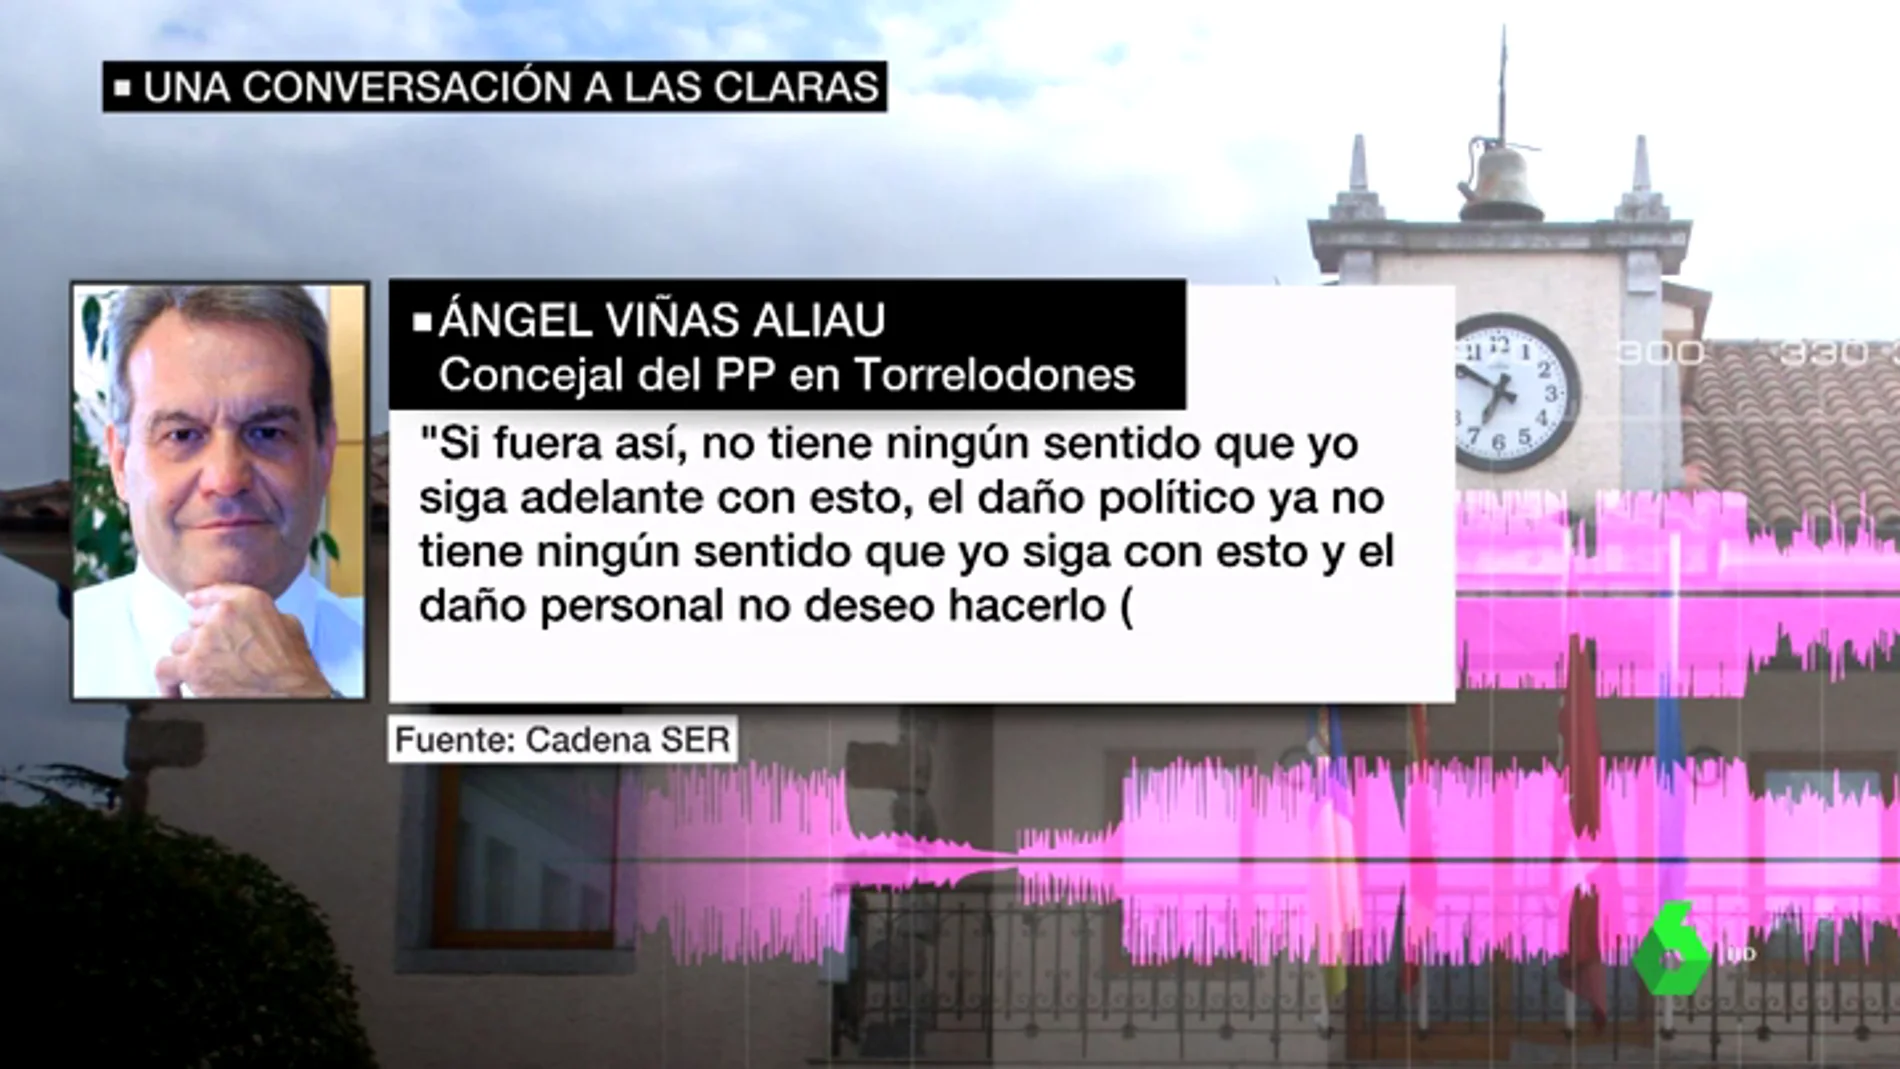 El chantaje de un concejal del PP a la alcaldesa de Torrelodones: "Queremos la silla. Si no os presentáis, intento frenar la denuncia"